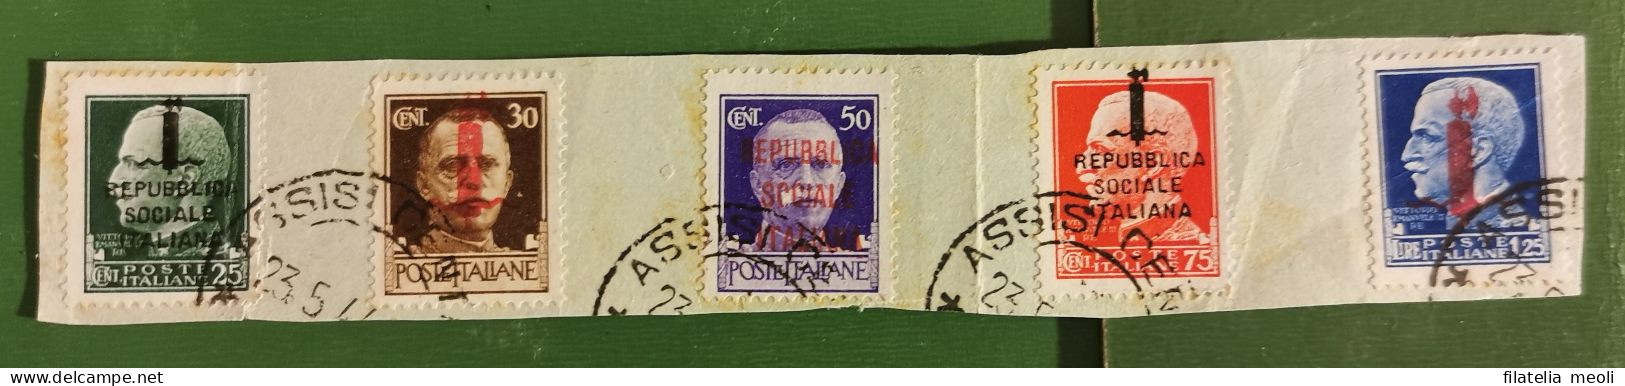 REPUBBLICA SOCIALE 1944 - Poststempel